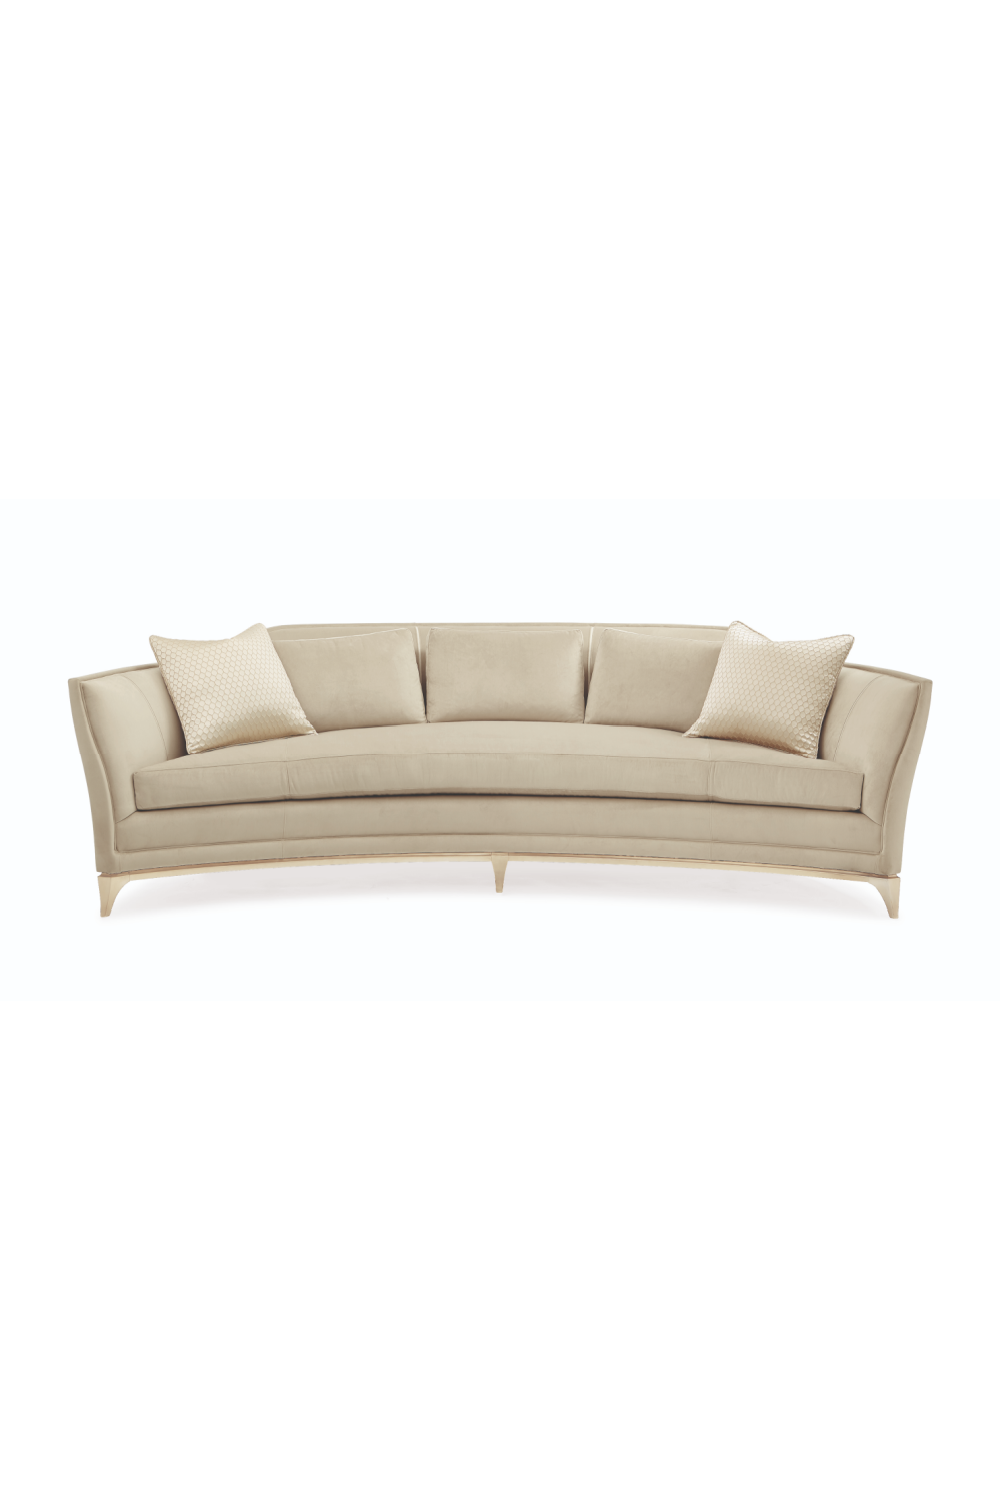 Beige Curved Sofa | Caracole Bend The Rules | Oroa.com